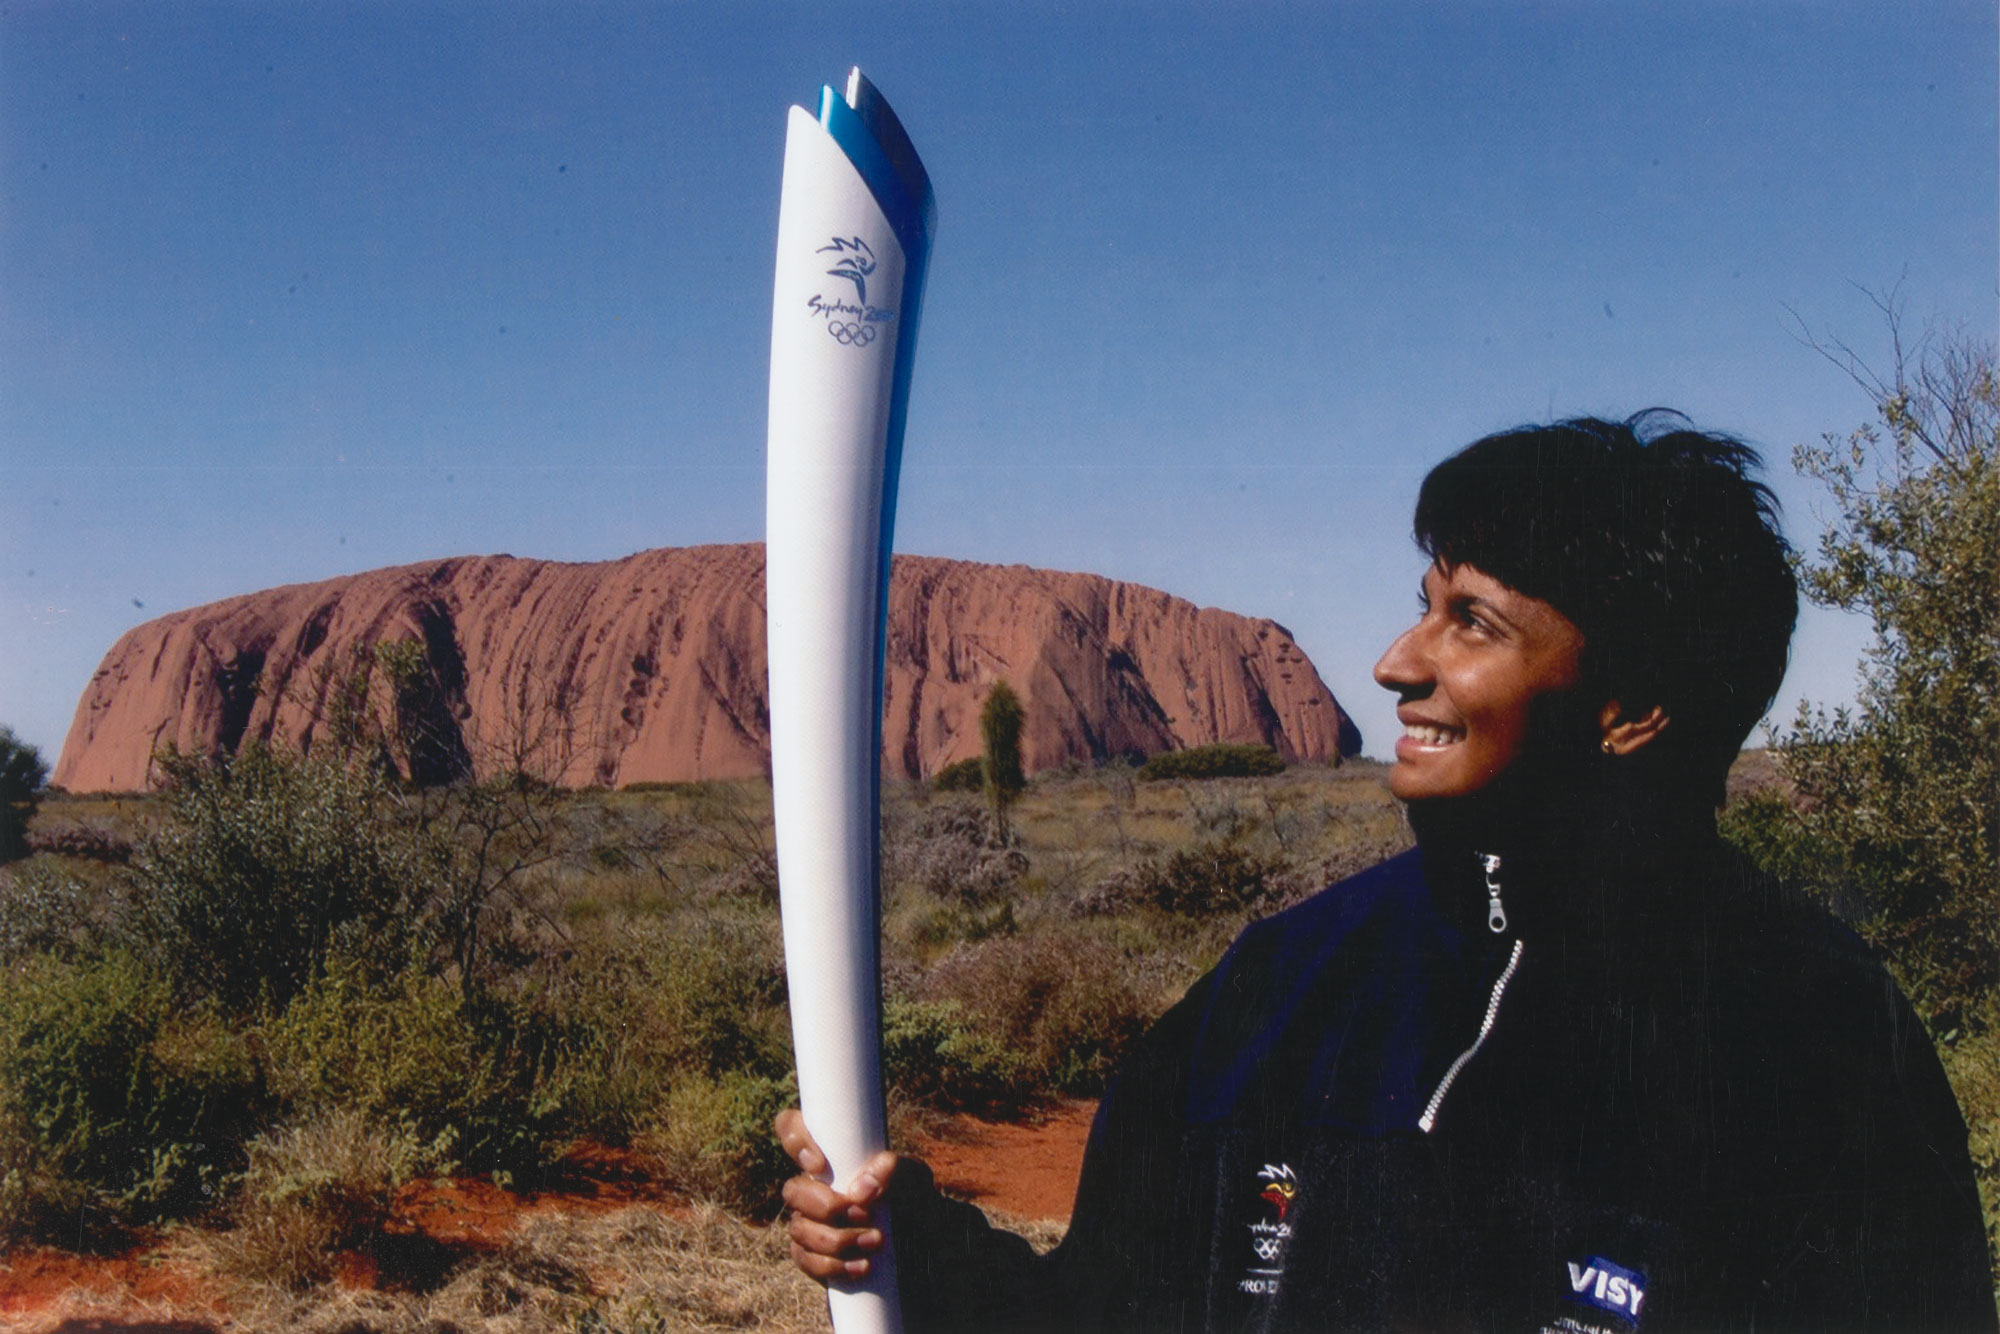 Nova Peris with Sydney 2000 Olympic torch in front of Uluru.